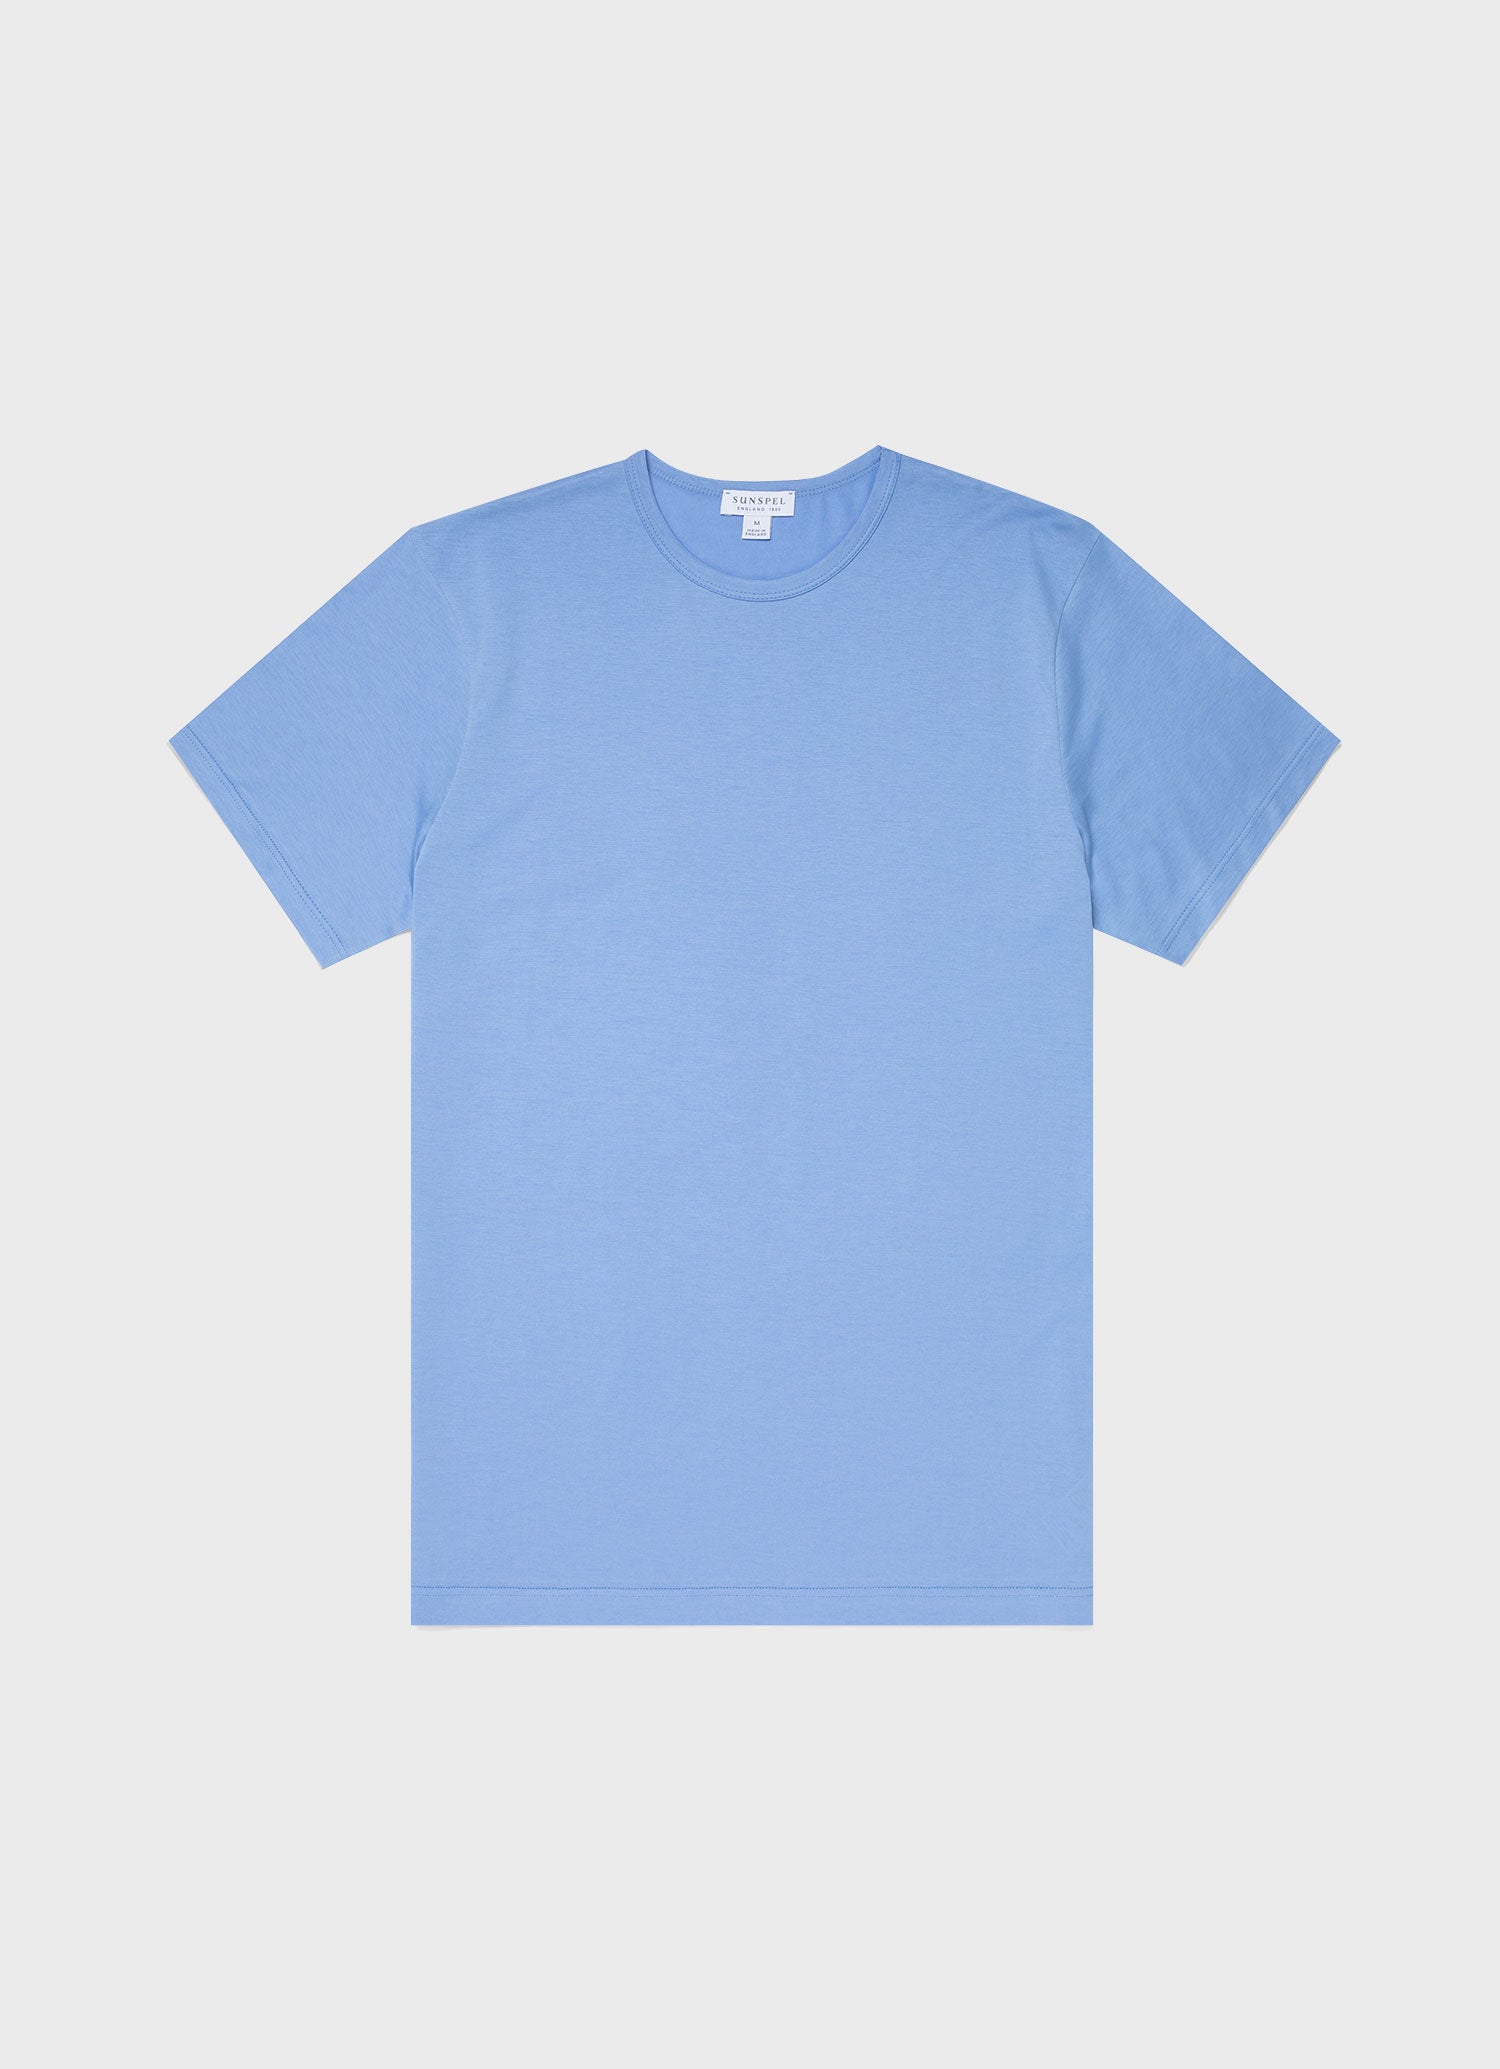 Men's Classic T-shirt in Cool Blue